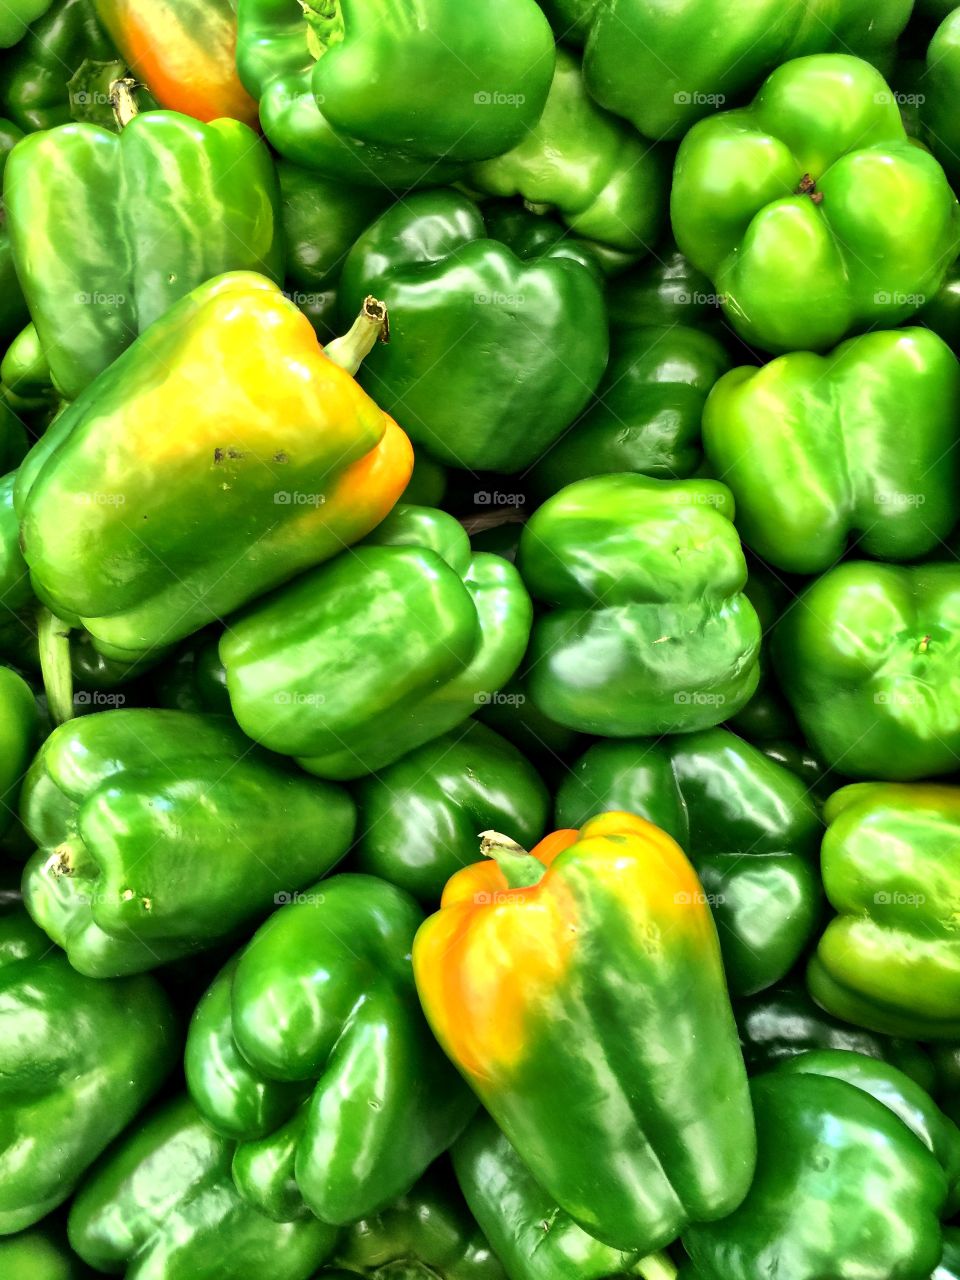 View of green bell pepper